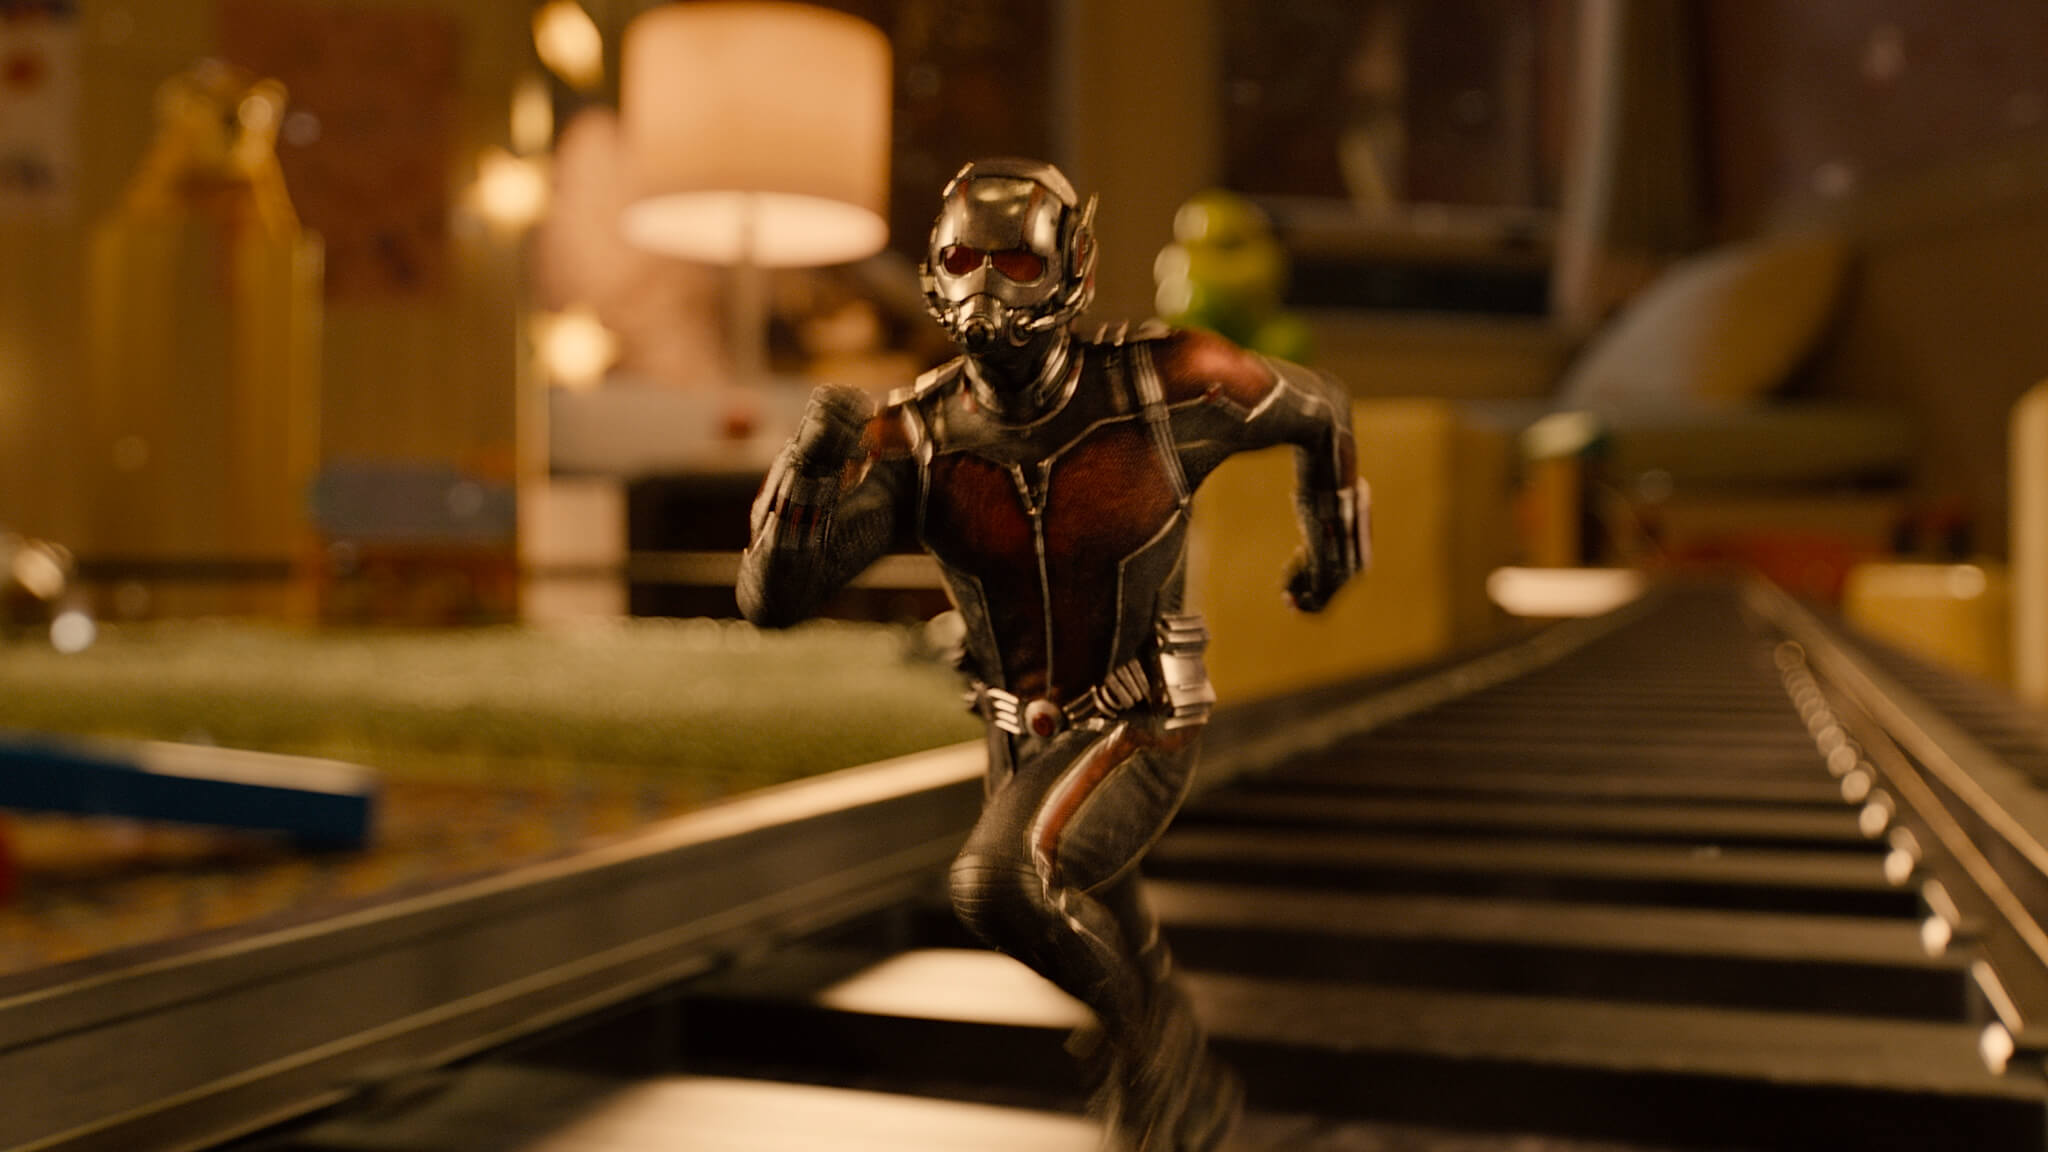 Ant-Man-(2015)